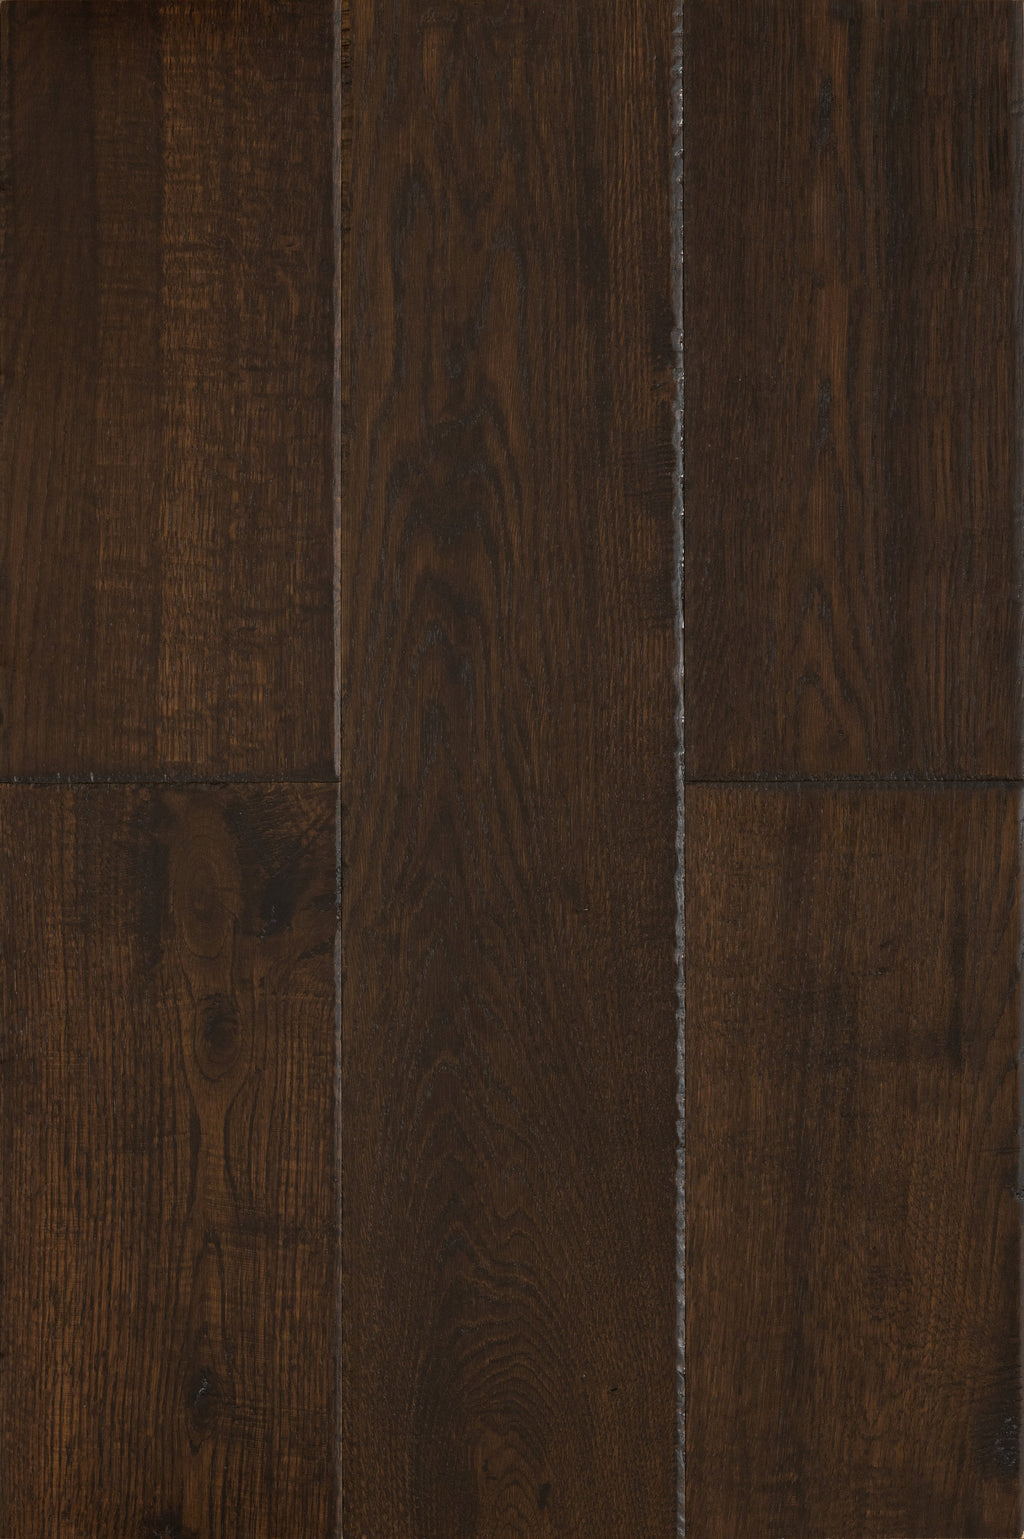 East West Furniture SP-7OH03 Sango Premier Engineered Wood Flooring - European Oak - 1/2 in x 7 in x Random Length Handscraped, 26.24 sqft/box, Autumn Brown